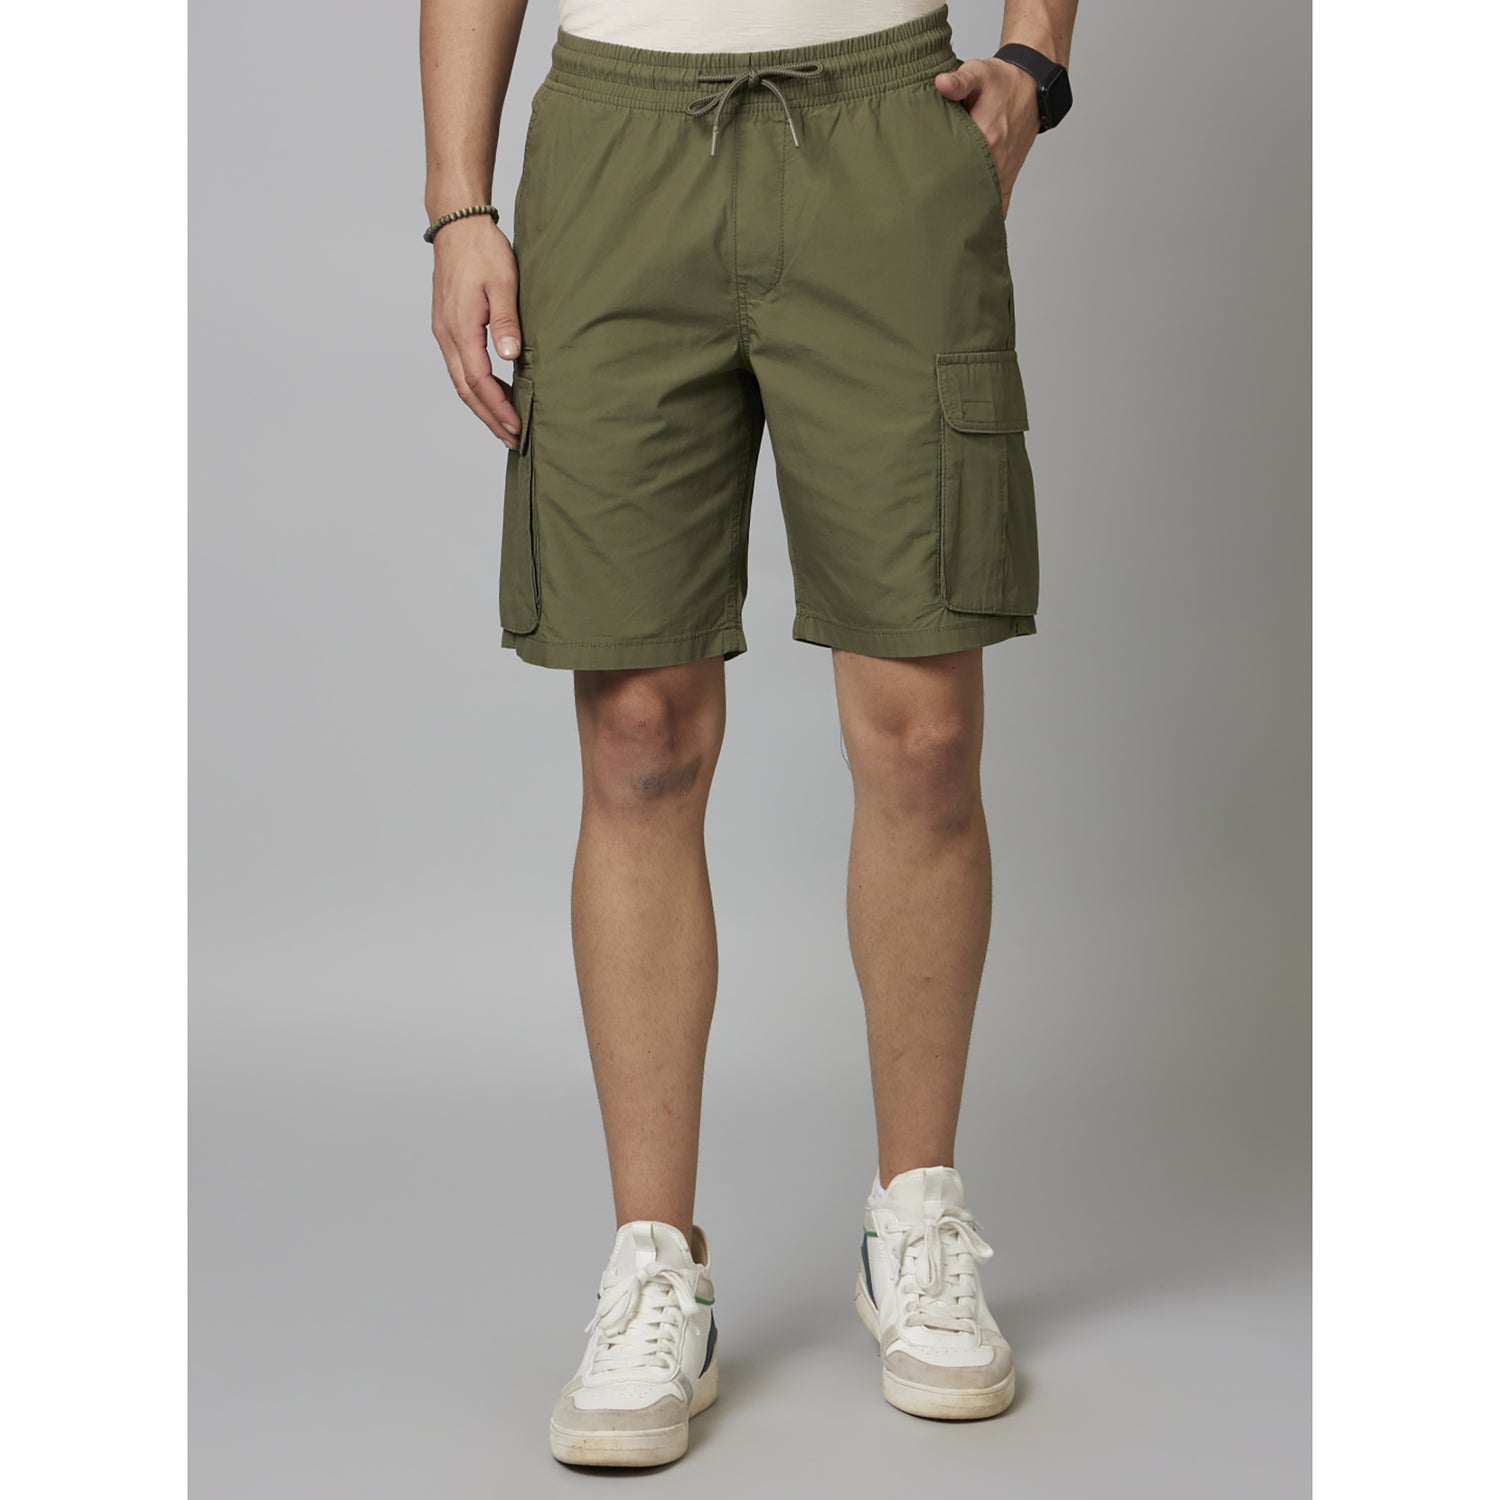 Khaki Solid Cotton Shorts (FOSTOPBM)